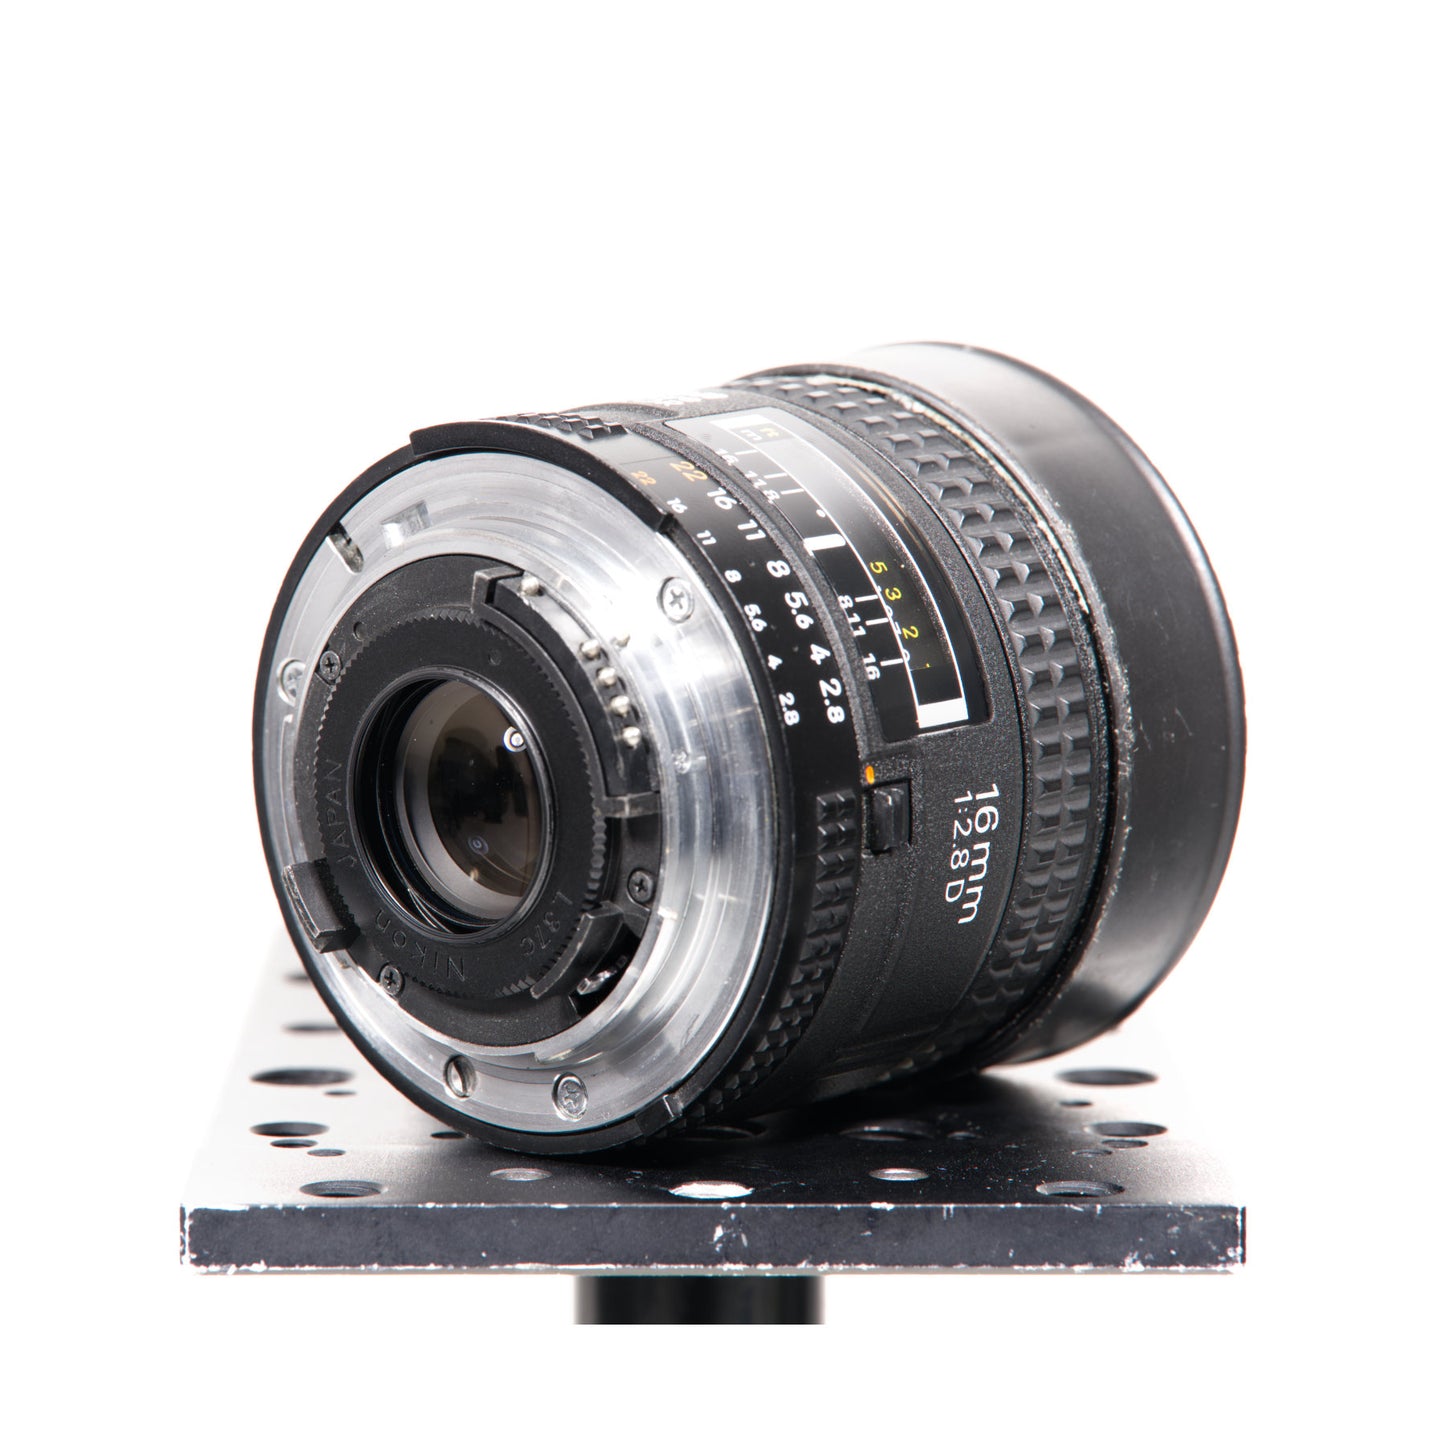 Buy Nikon AF Fisheye-NIKKOR 16mm f/2.8D Lens at Topic Store